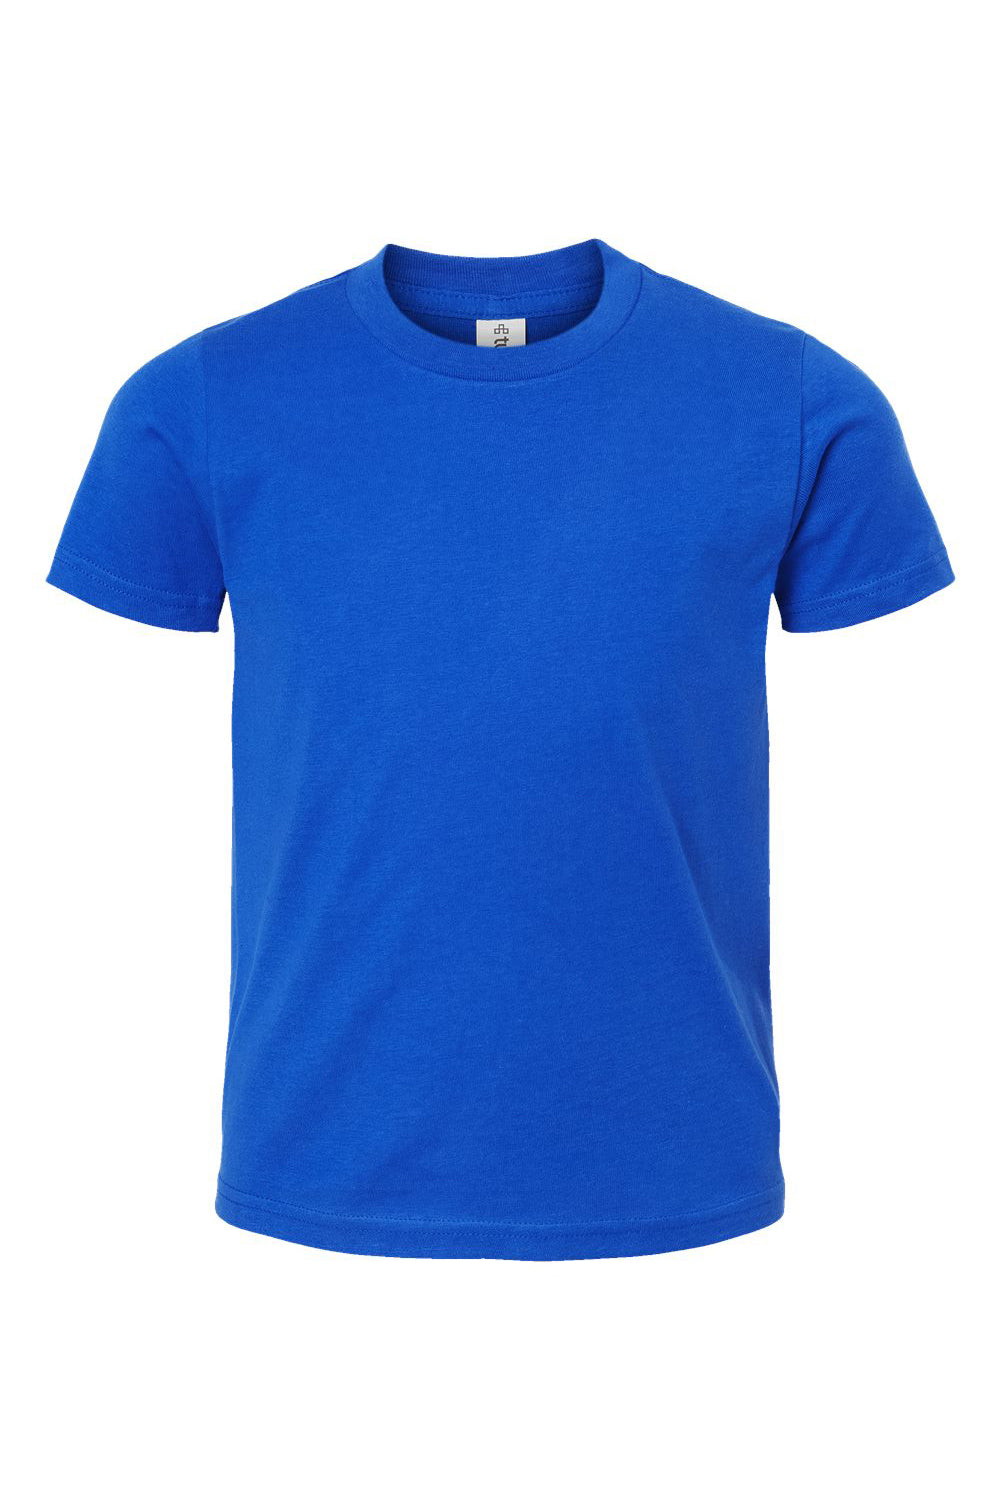 Tultex 235 Youth Fine Jersey Short Sleeve Crewneck T-Shirt Royal Blue Flat Front